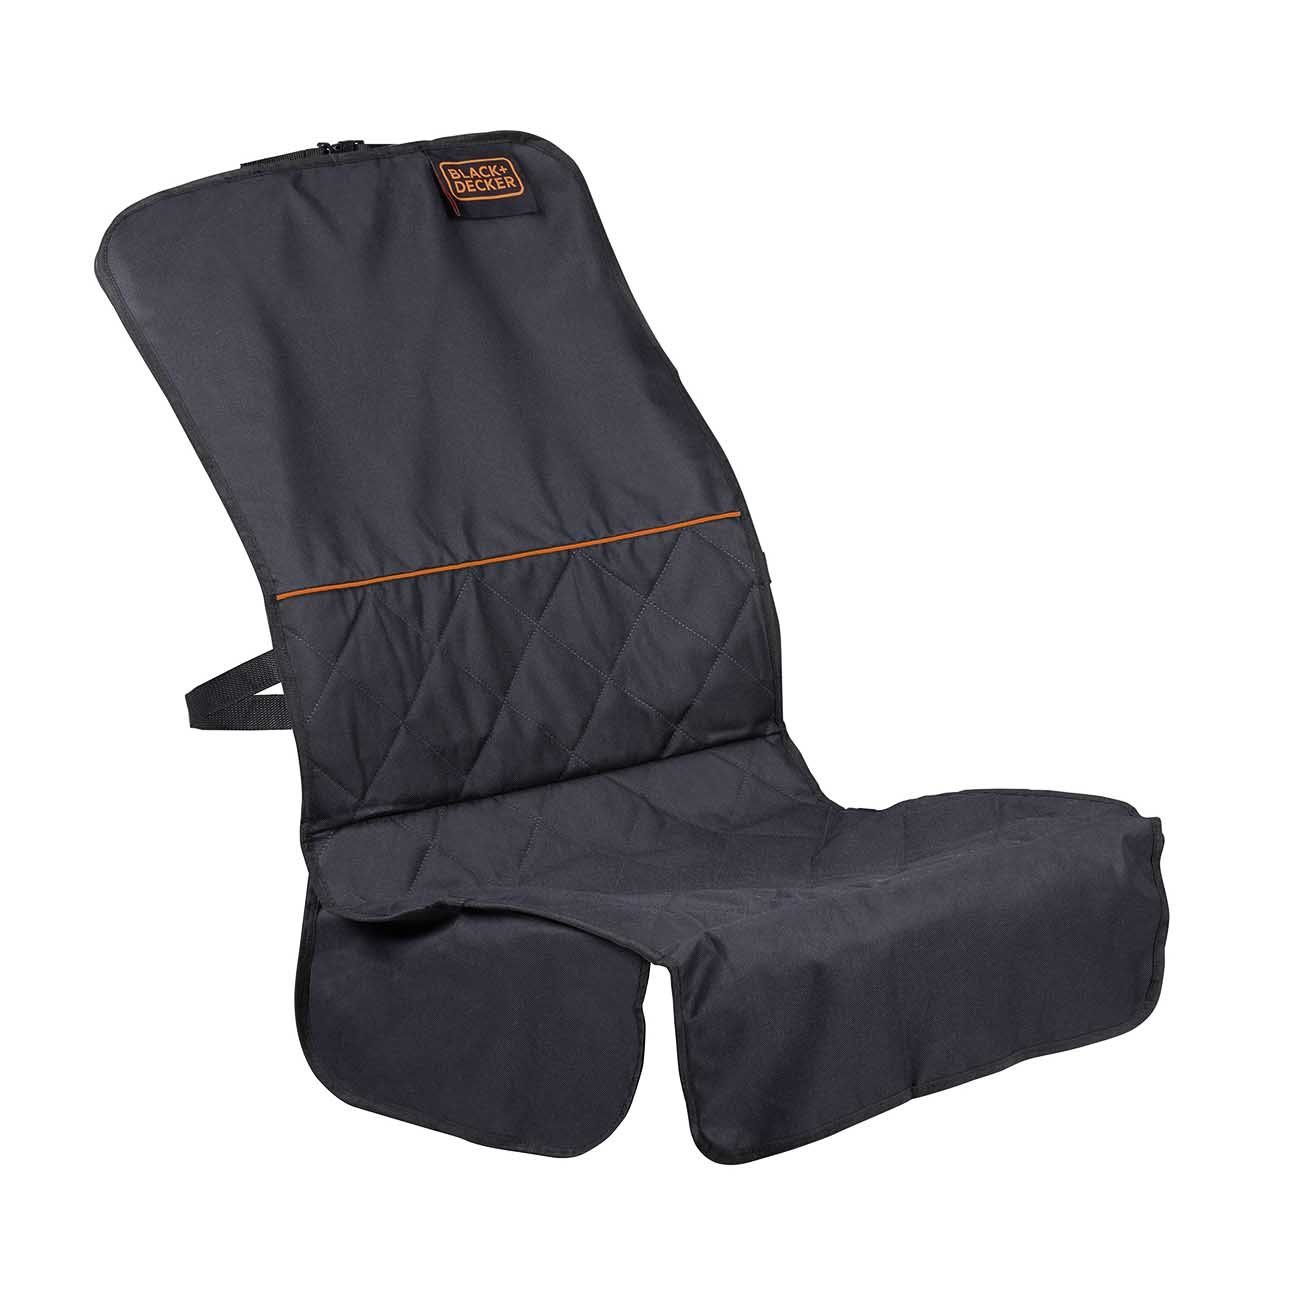 L & P Car Design Kindersitzunterlage Kindersitzschoner in schwarz ISOFIX  geeignet Cordura Material, 2 Stück